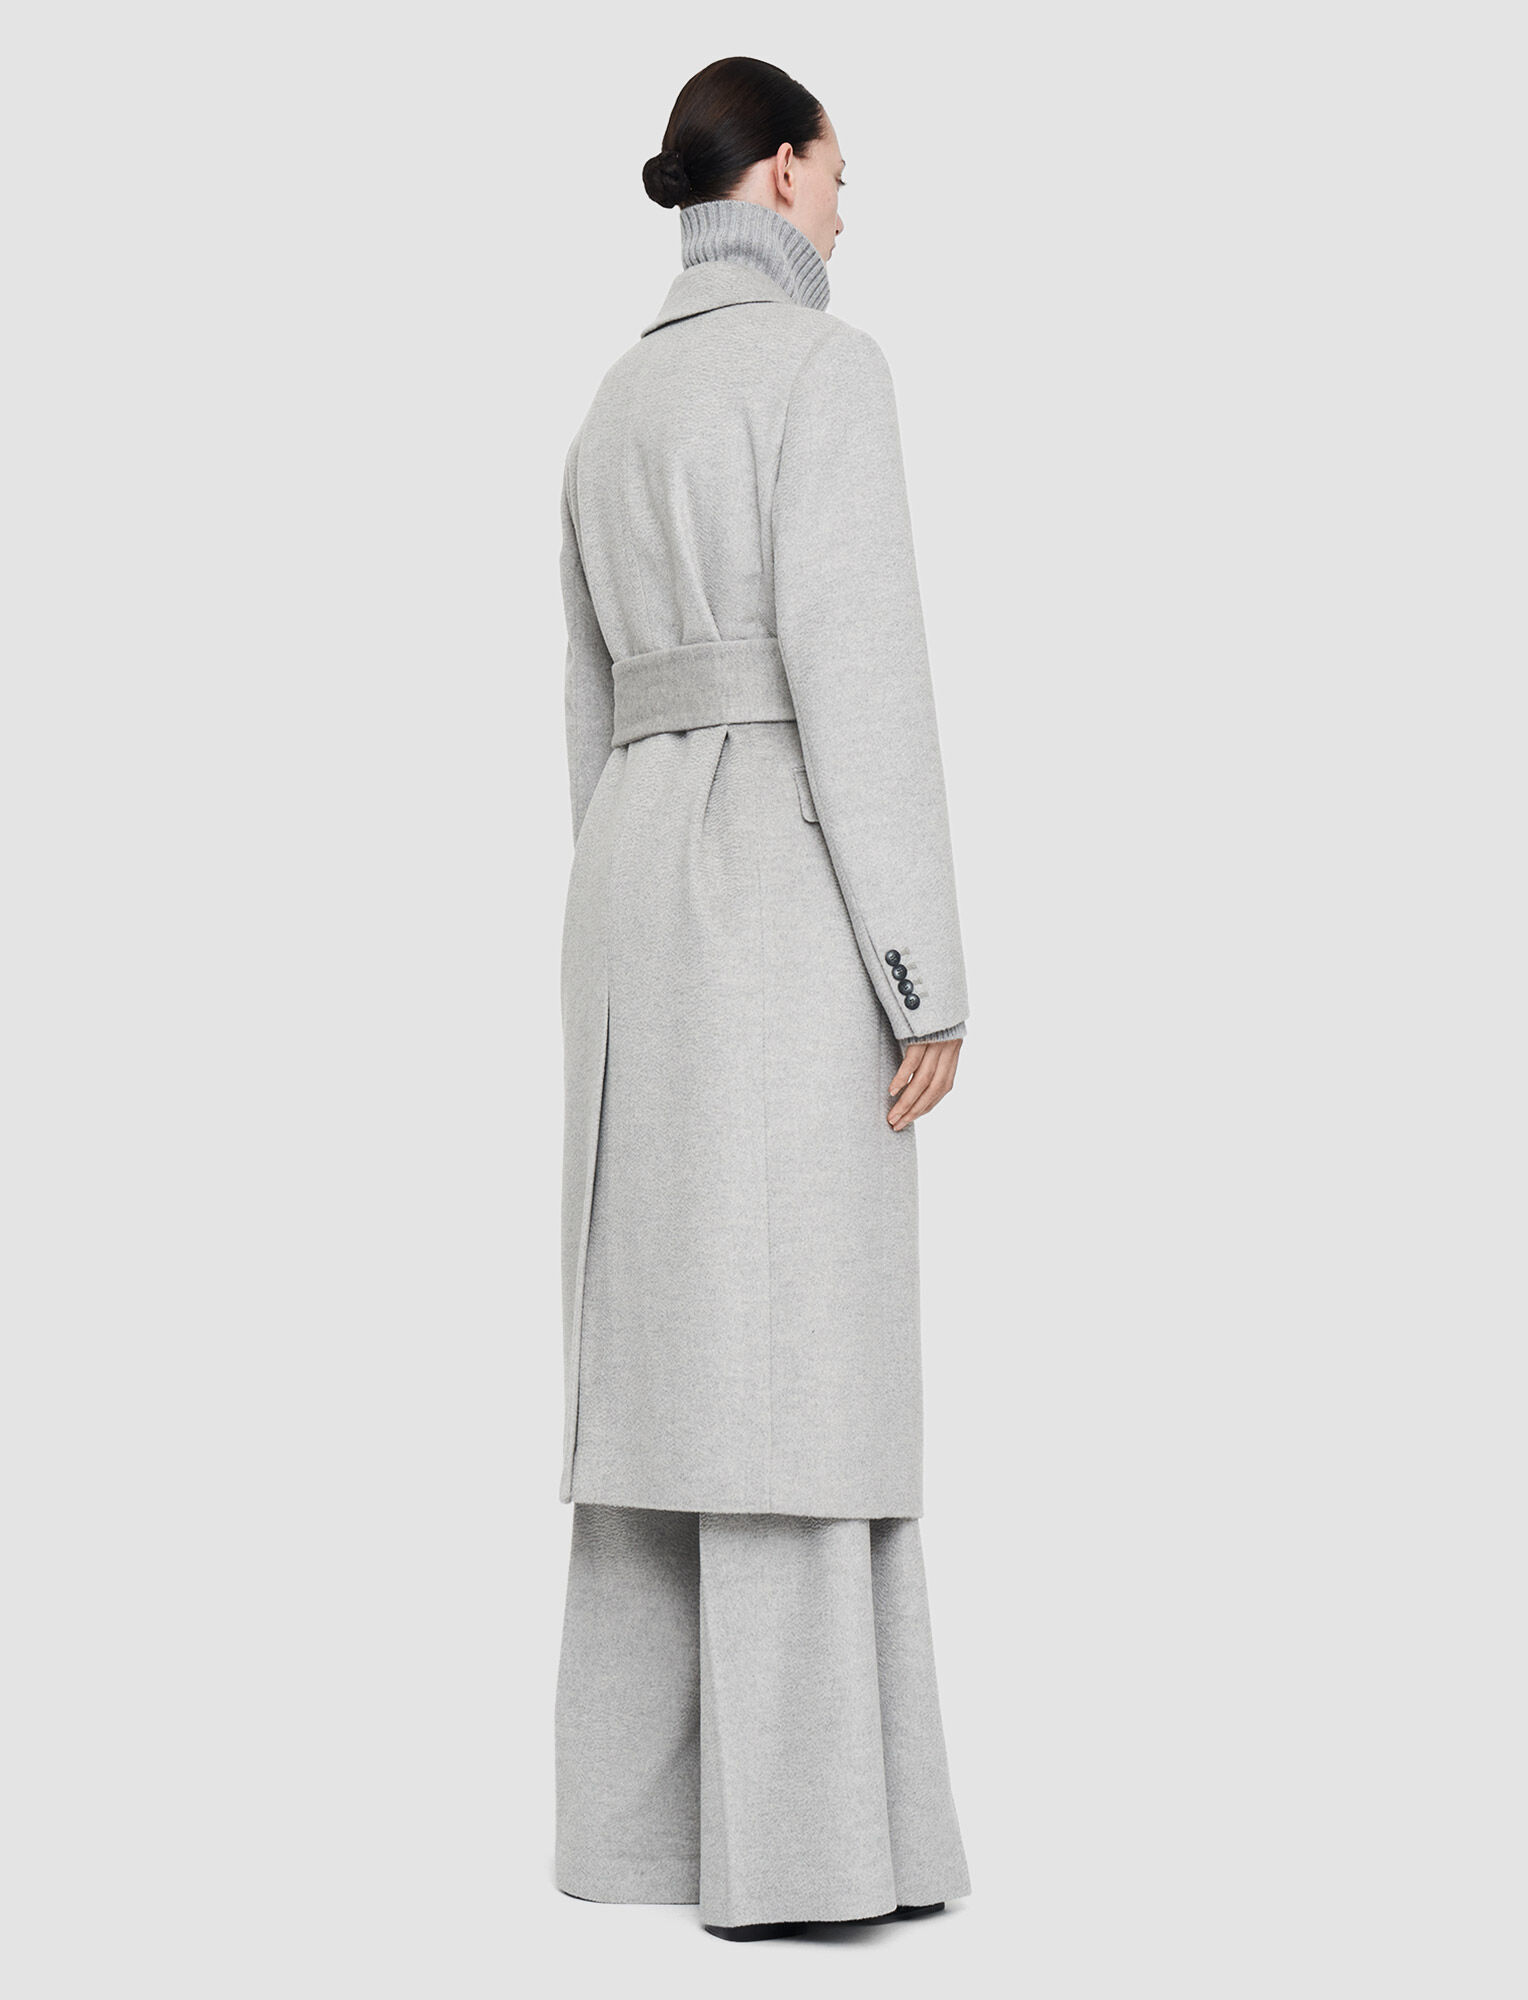 Joseph, Watermark Wool Clichy Coat, in Light Grey Melange